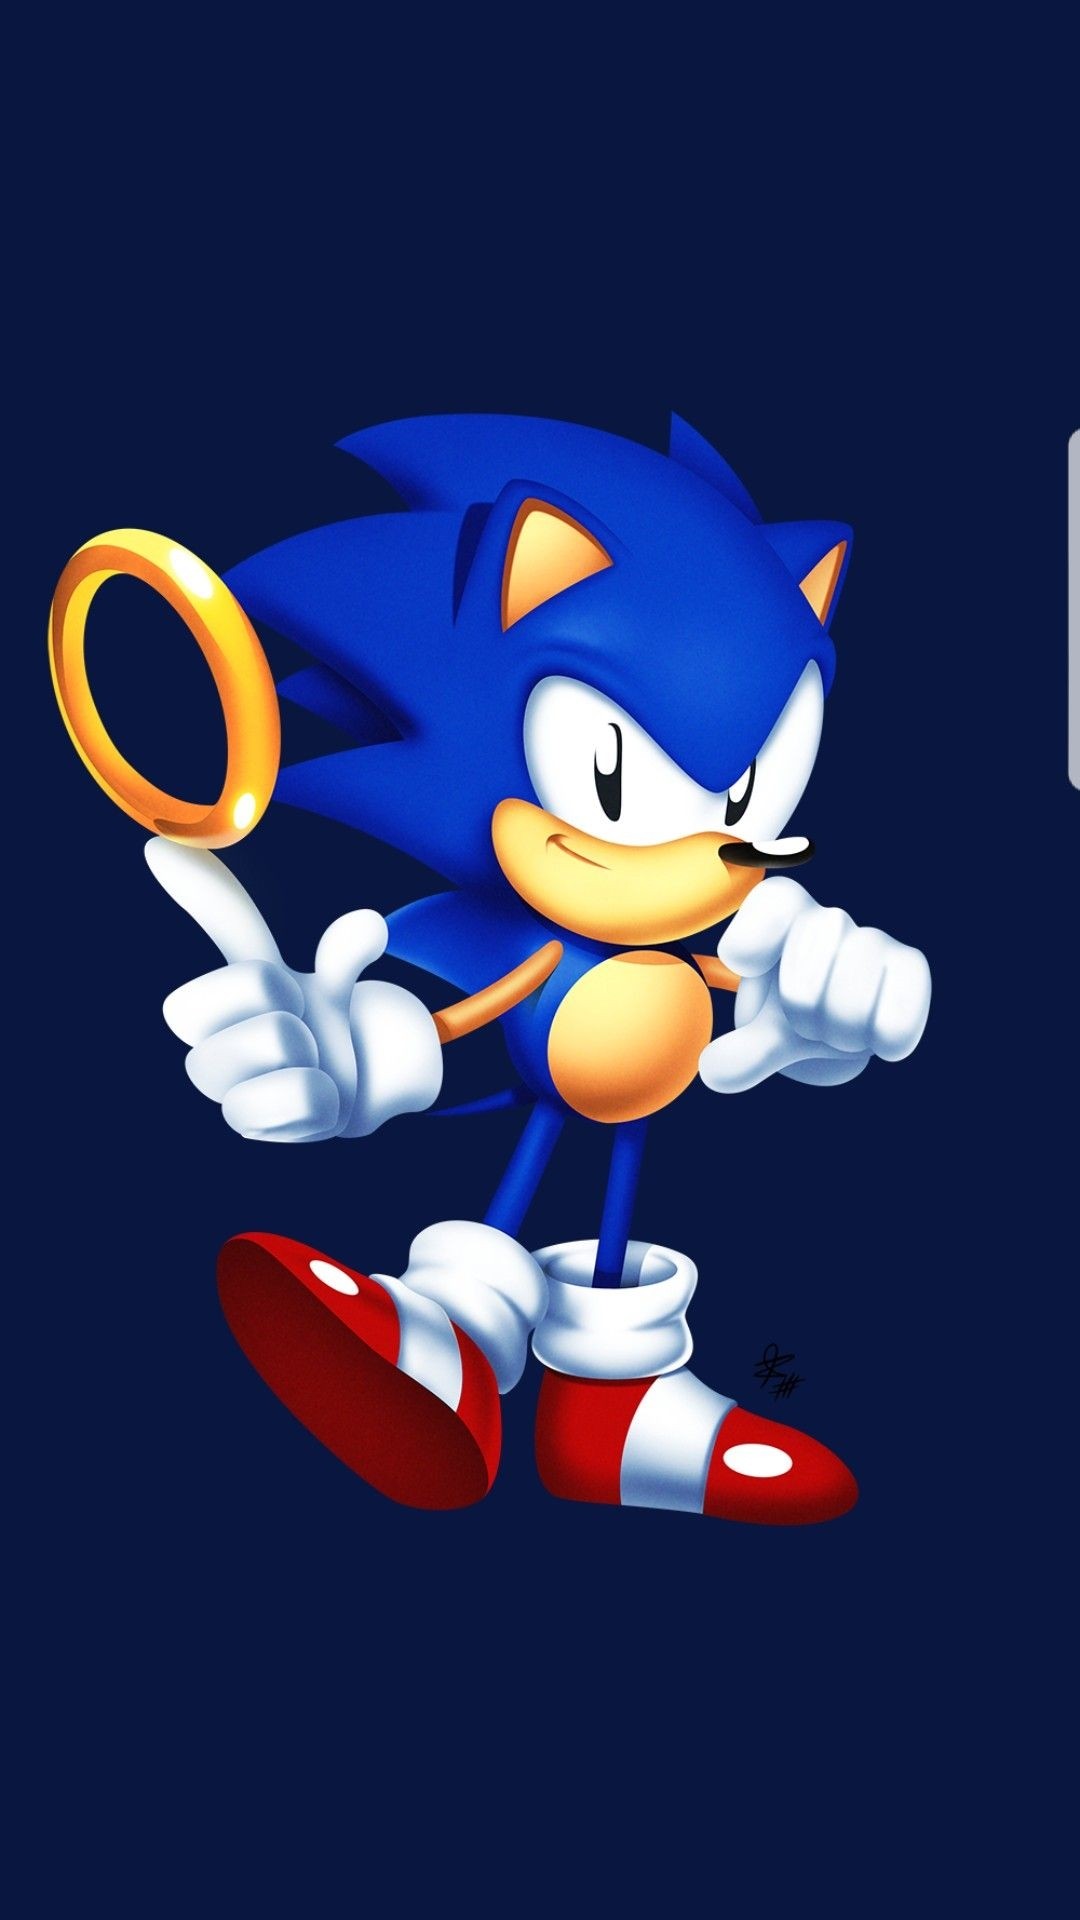 Sonic The Hedgehog iphone 5s